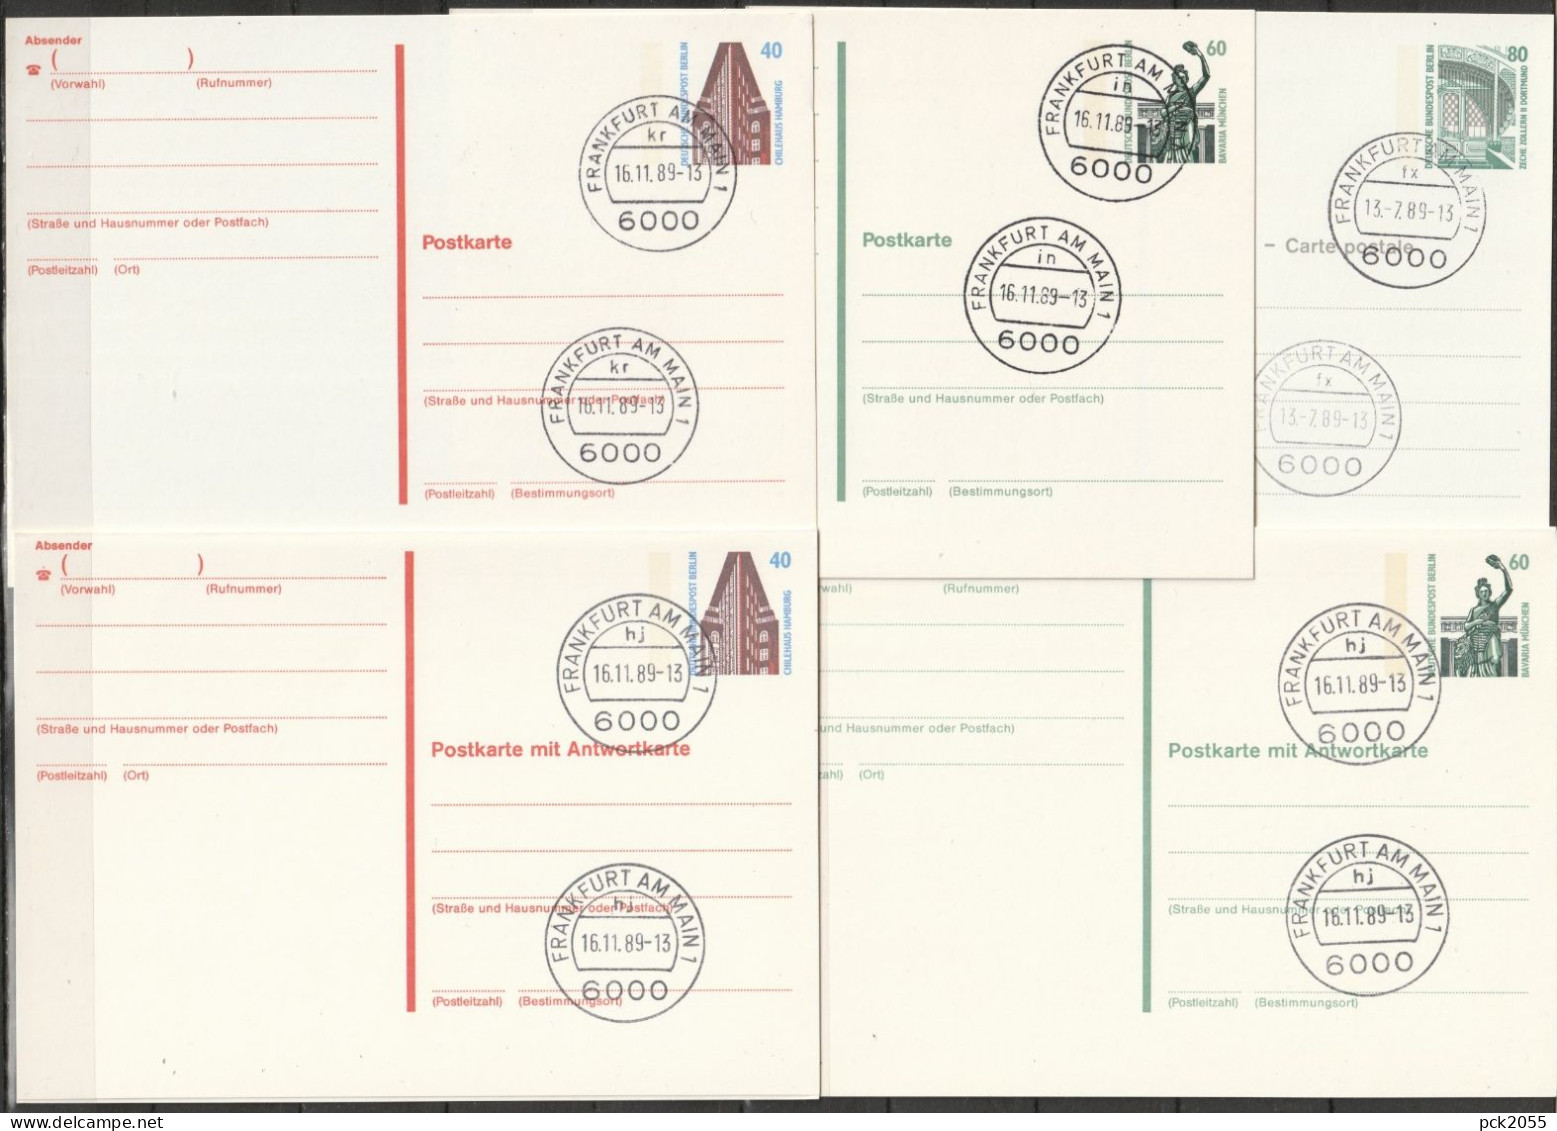 Berlin Ganzsache 1988 Mi.-Nr. P129 - P133  Tagesstempel FRANKFURT  13.7.89- 16.11.89  ( PK 486 ) - Postkarten - Gebraucht